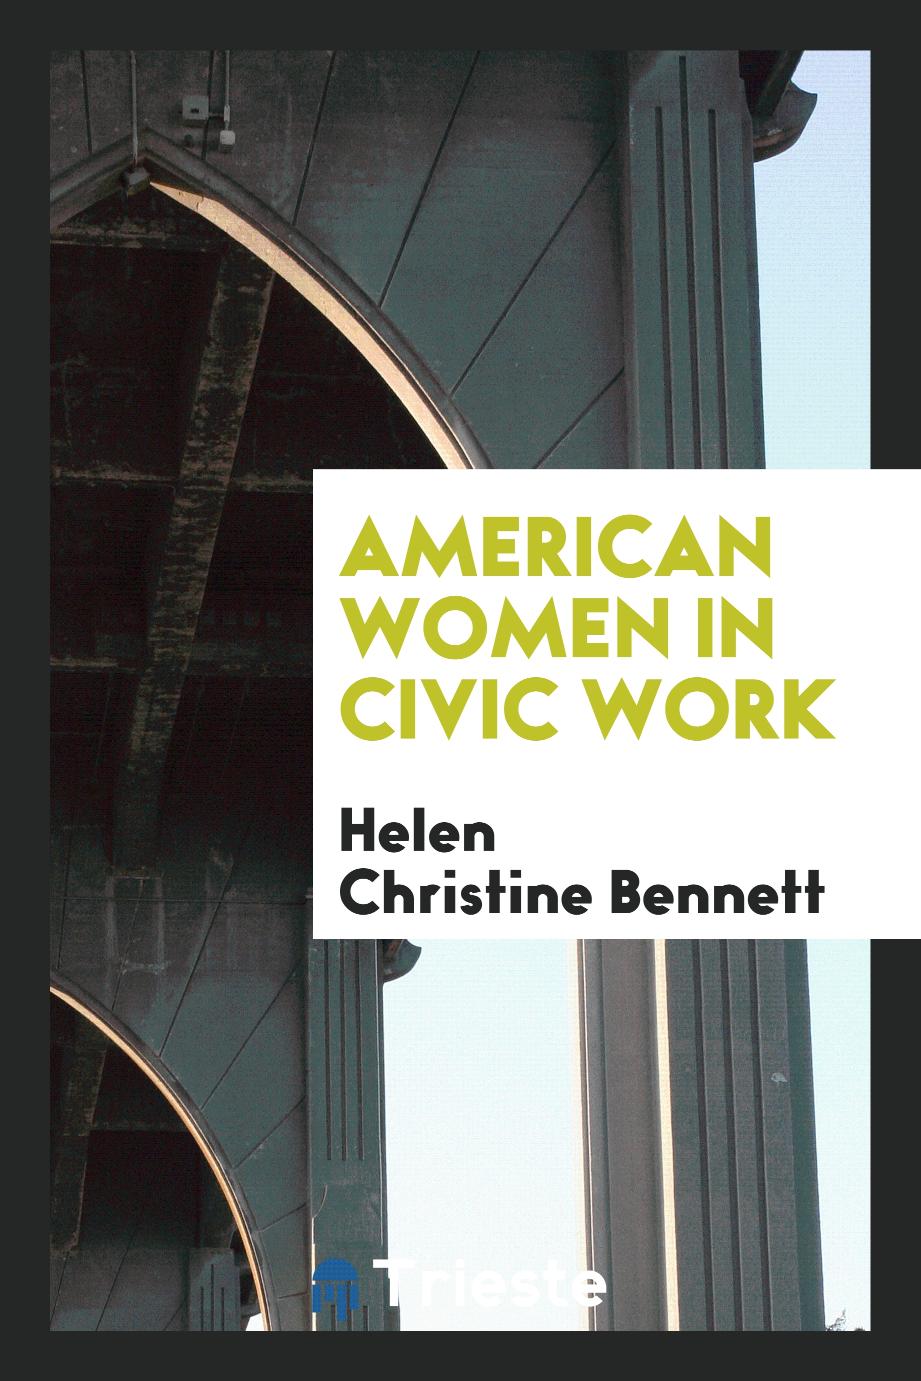 American women in civic work